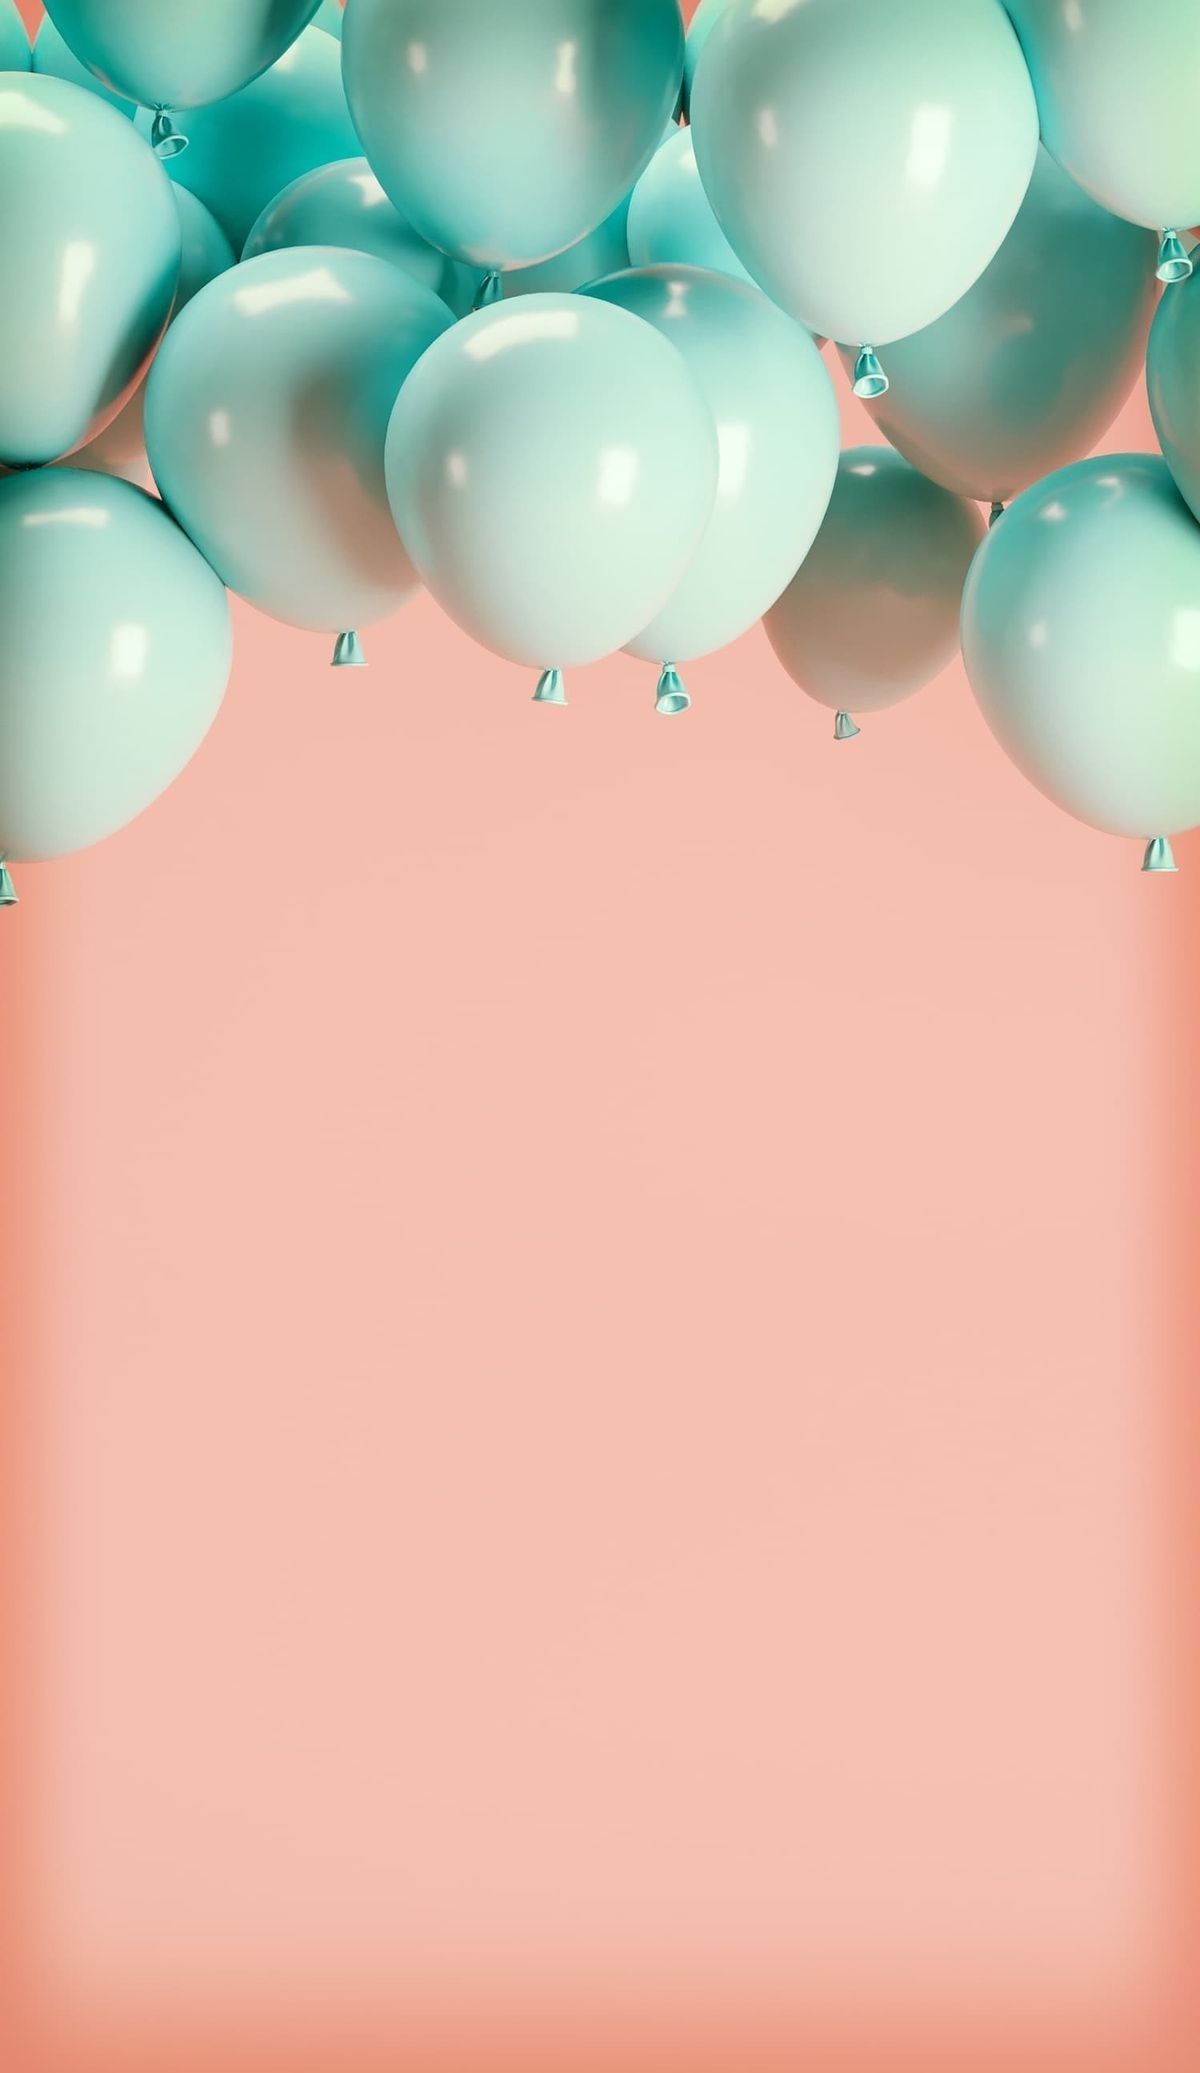 Balloon iPhone Wallpaper Top Background